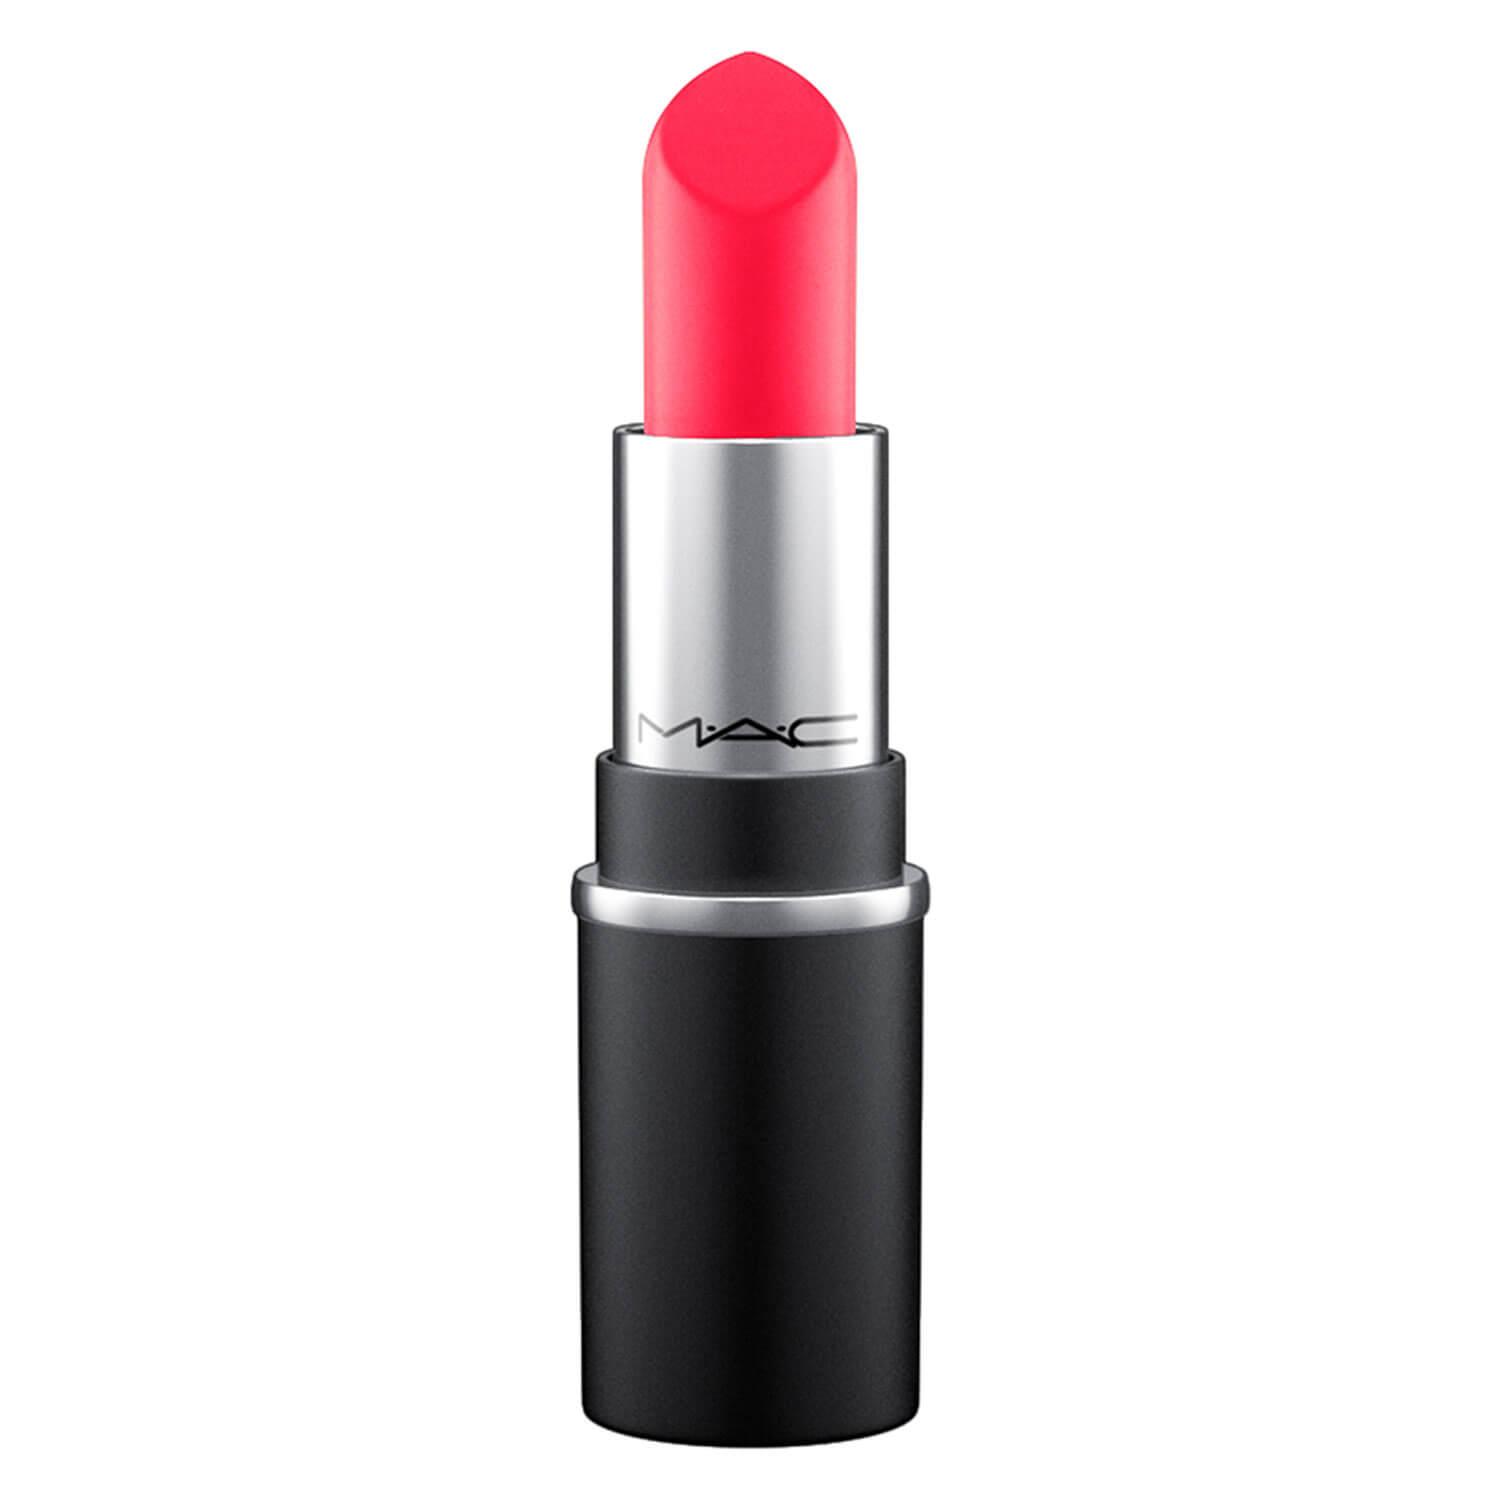 Little M·A·C - Retro Matte Lipstick Relentlessly Red